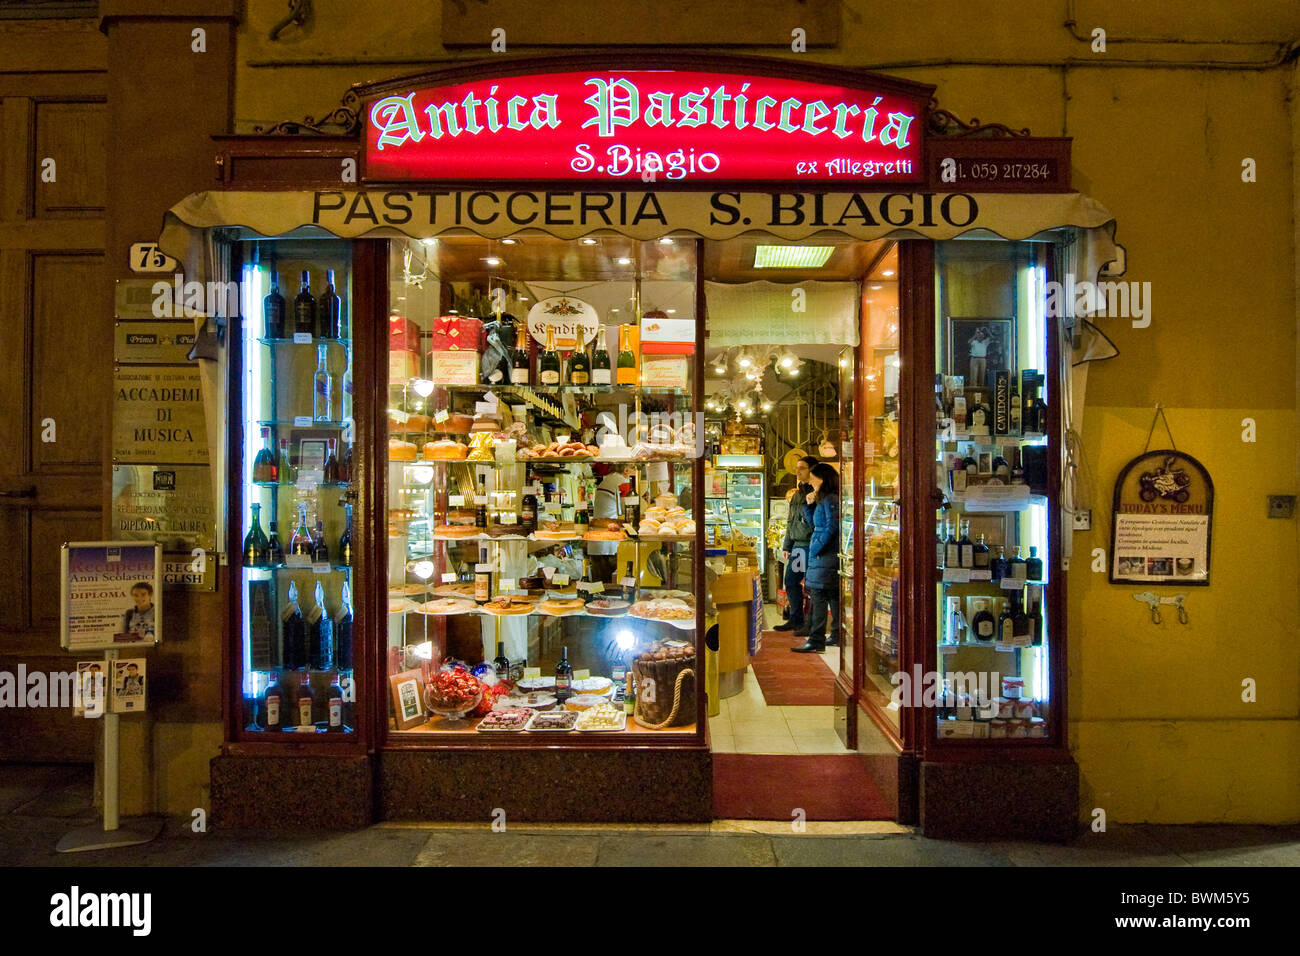 Antica pasticceria S. Biagio, Via Emilia, Modena, Emilia Romagna, Italy  Stock Photo - Alamy